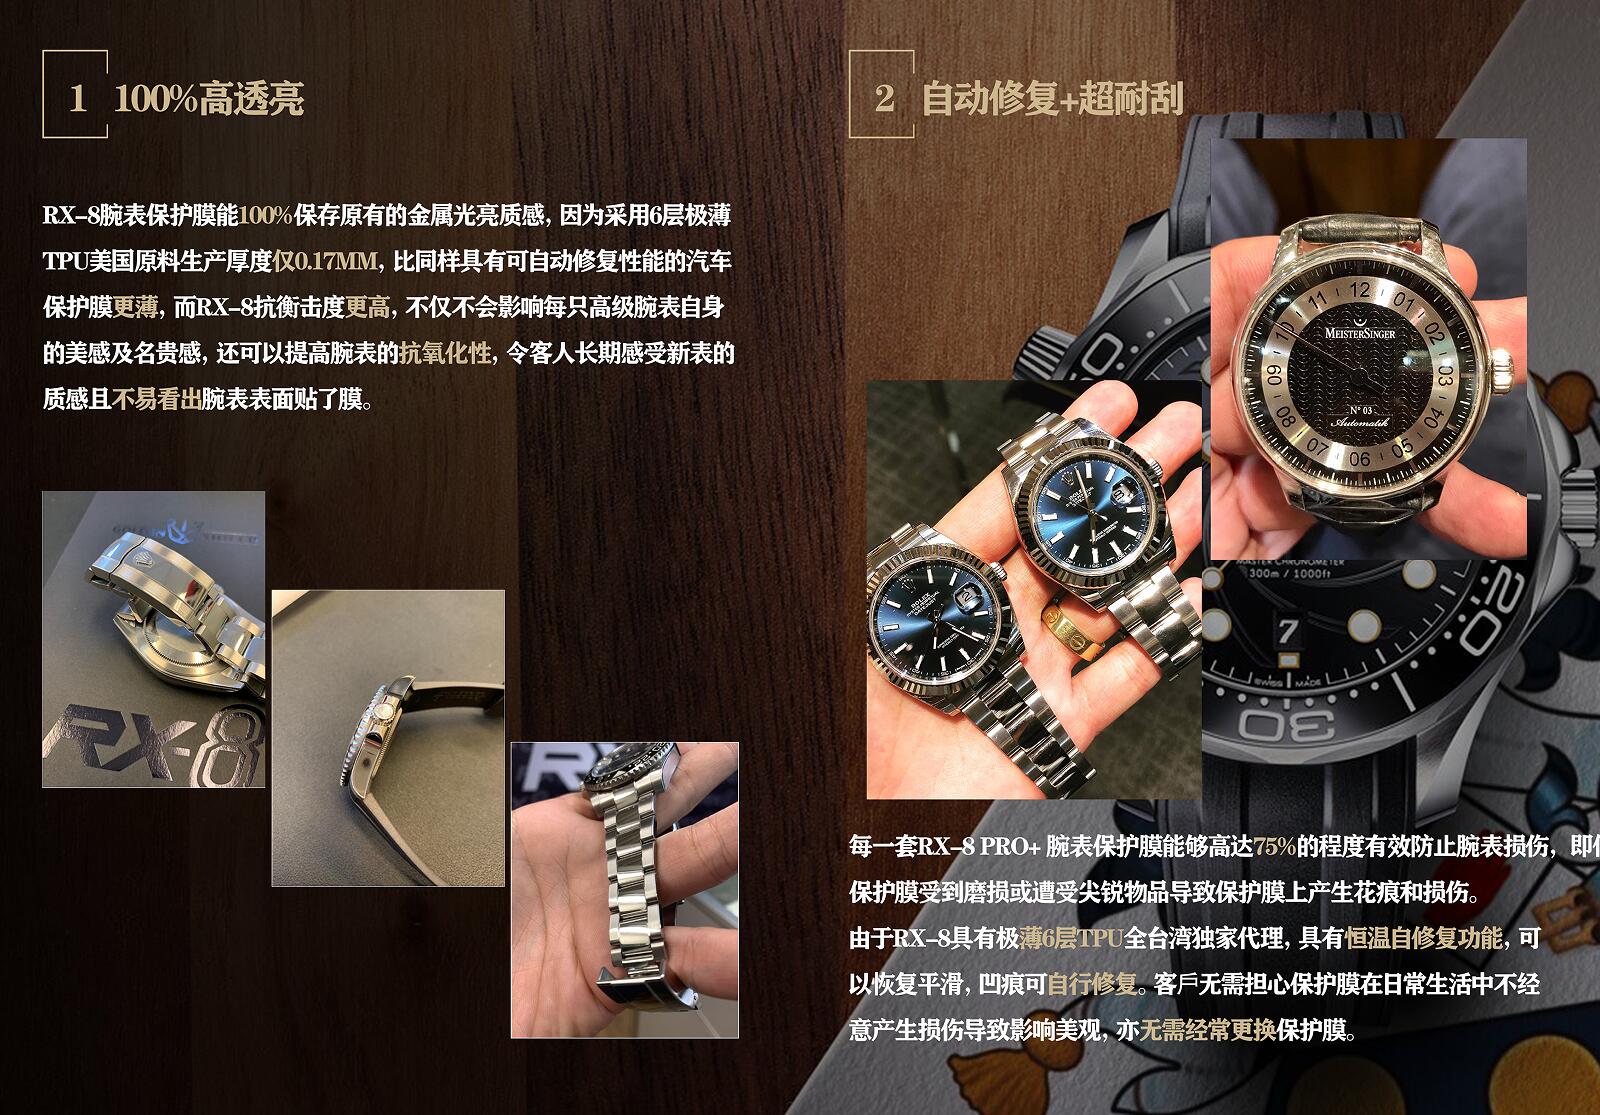 RX8贴膜适用于百达翡丽pp5990 手表保护膜 外表圈表盘表扣